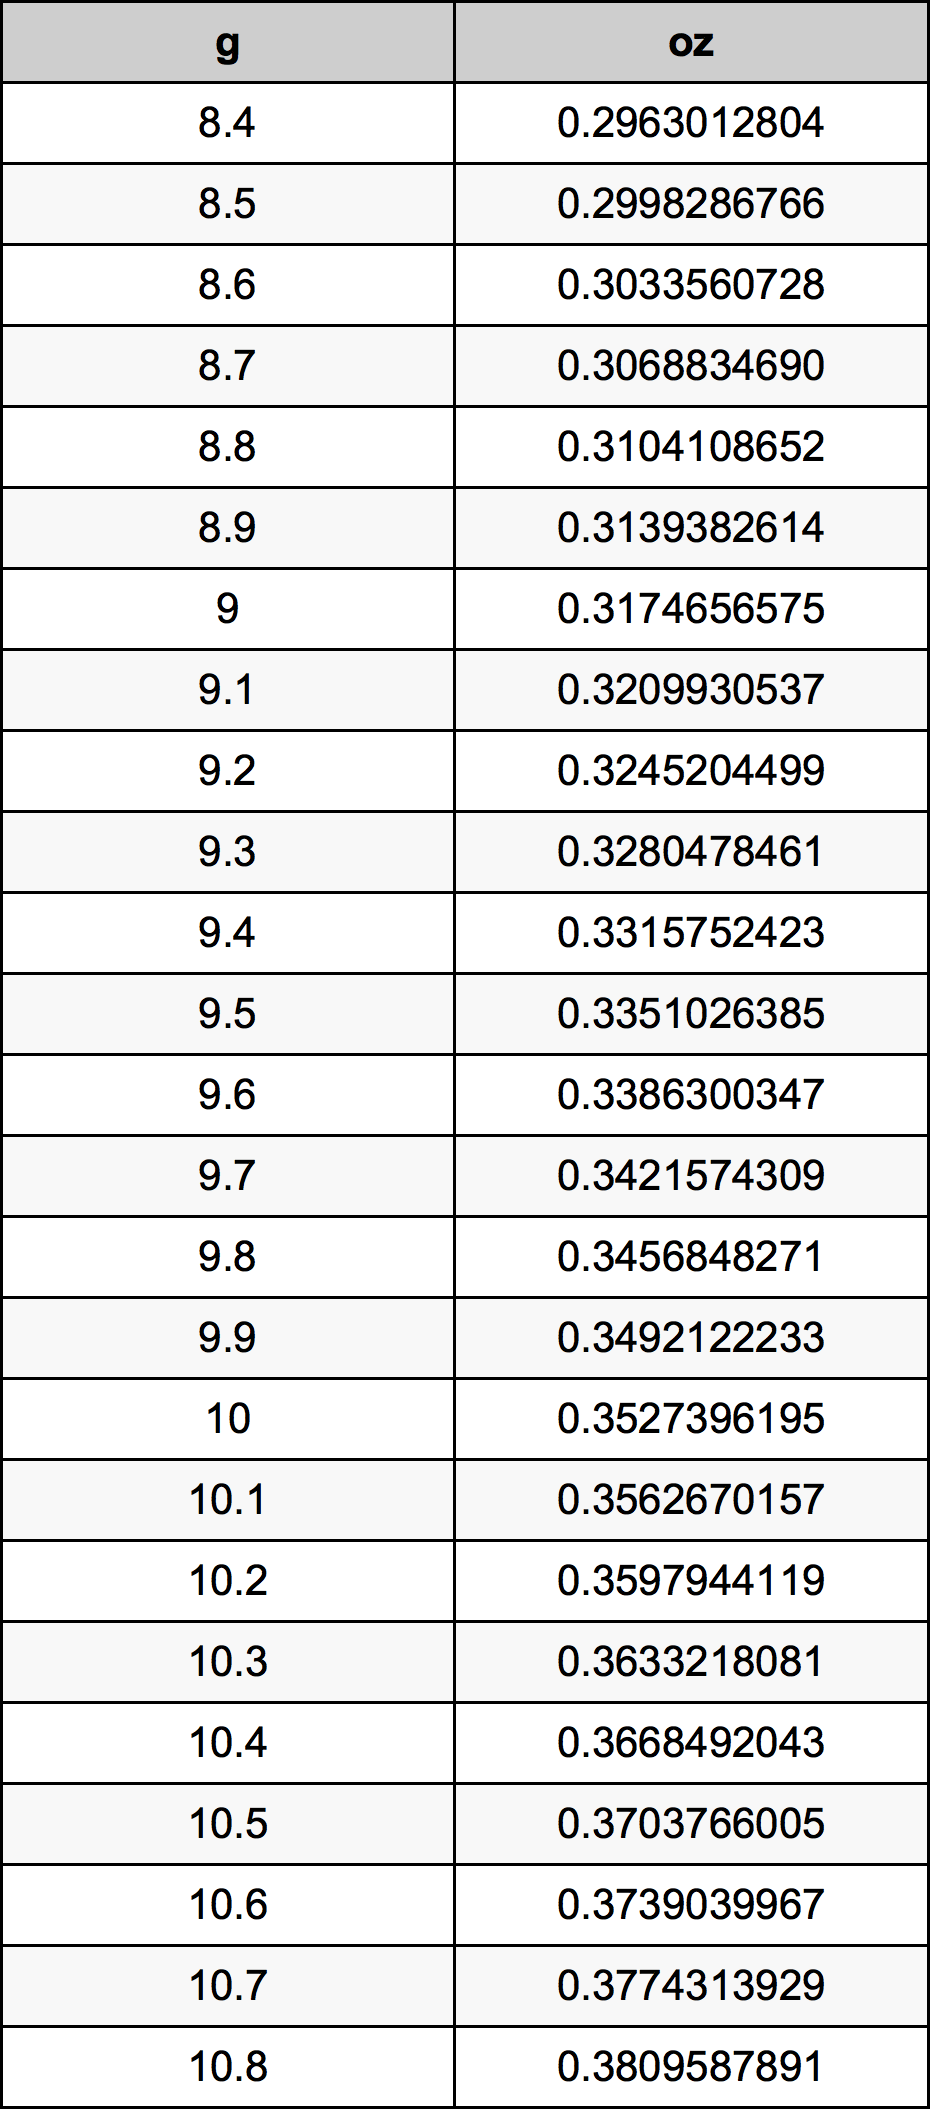 9.6 غرام جدول تحويل